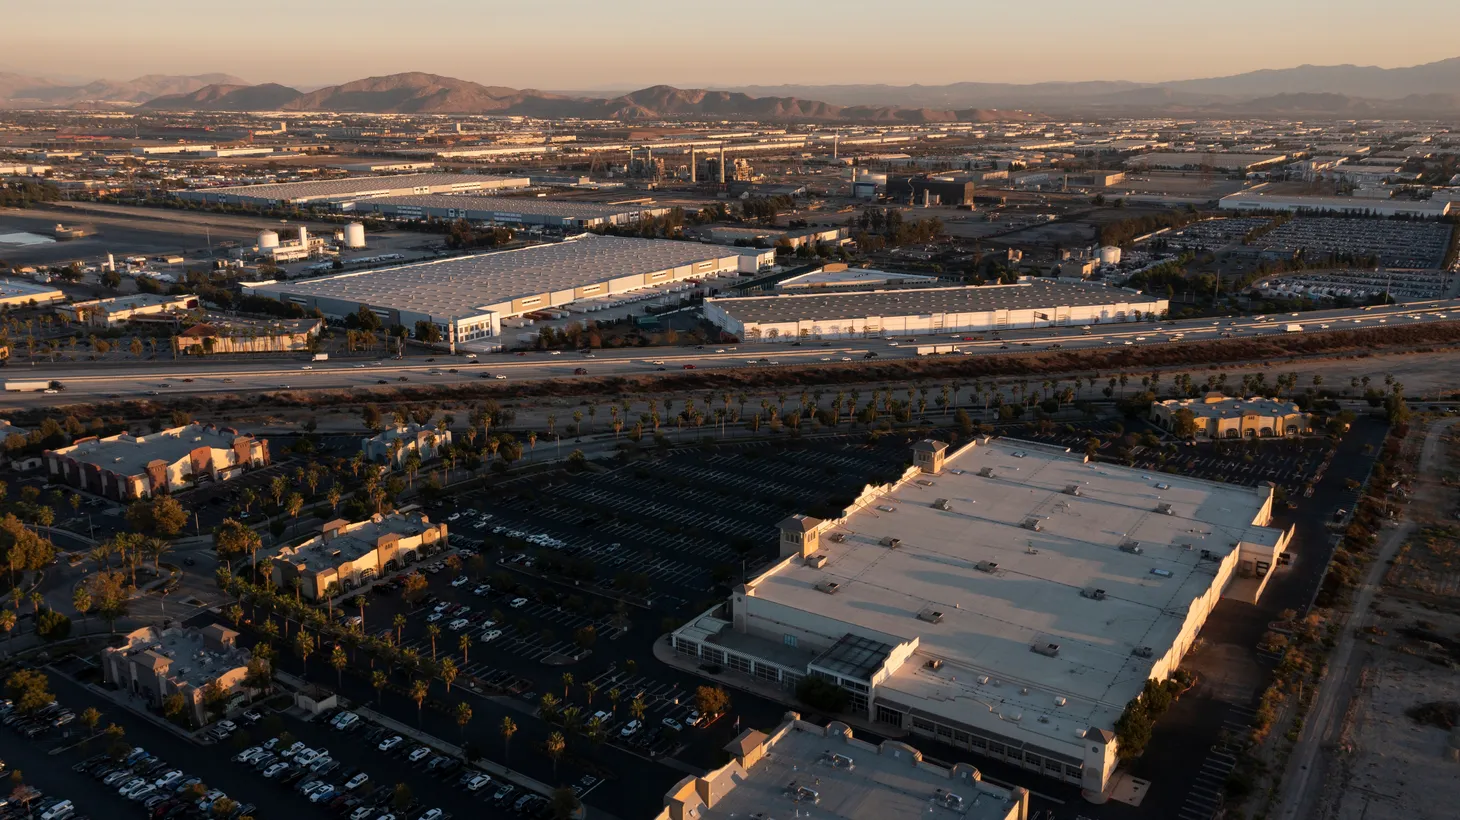 An aerial view shows the industrial core of downtown Rancho Cucamonga, San Bernardino County, California.